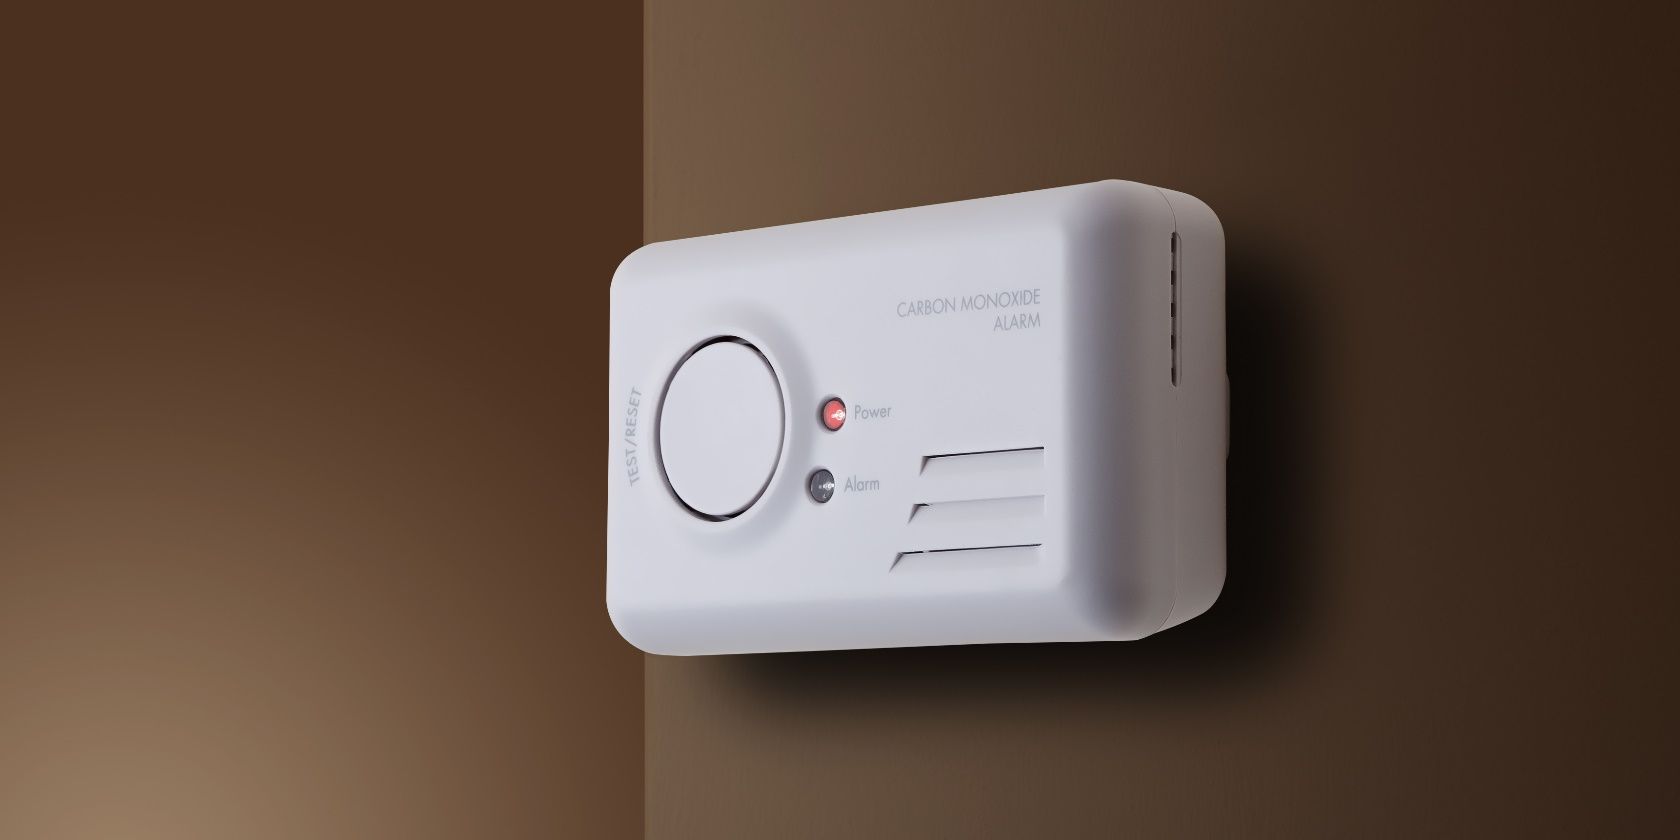 Carbon Monoxide alarm mounted to interior wall